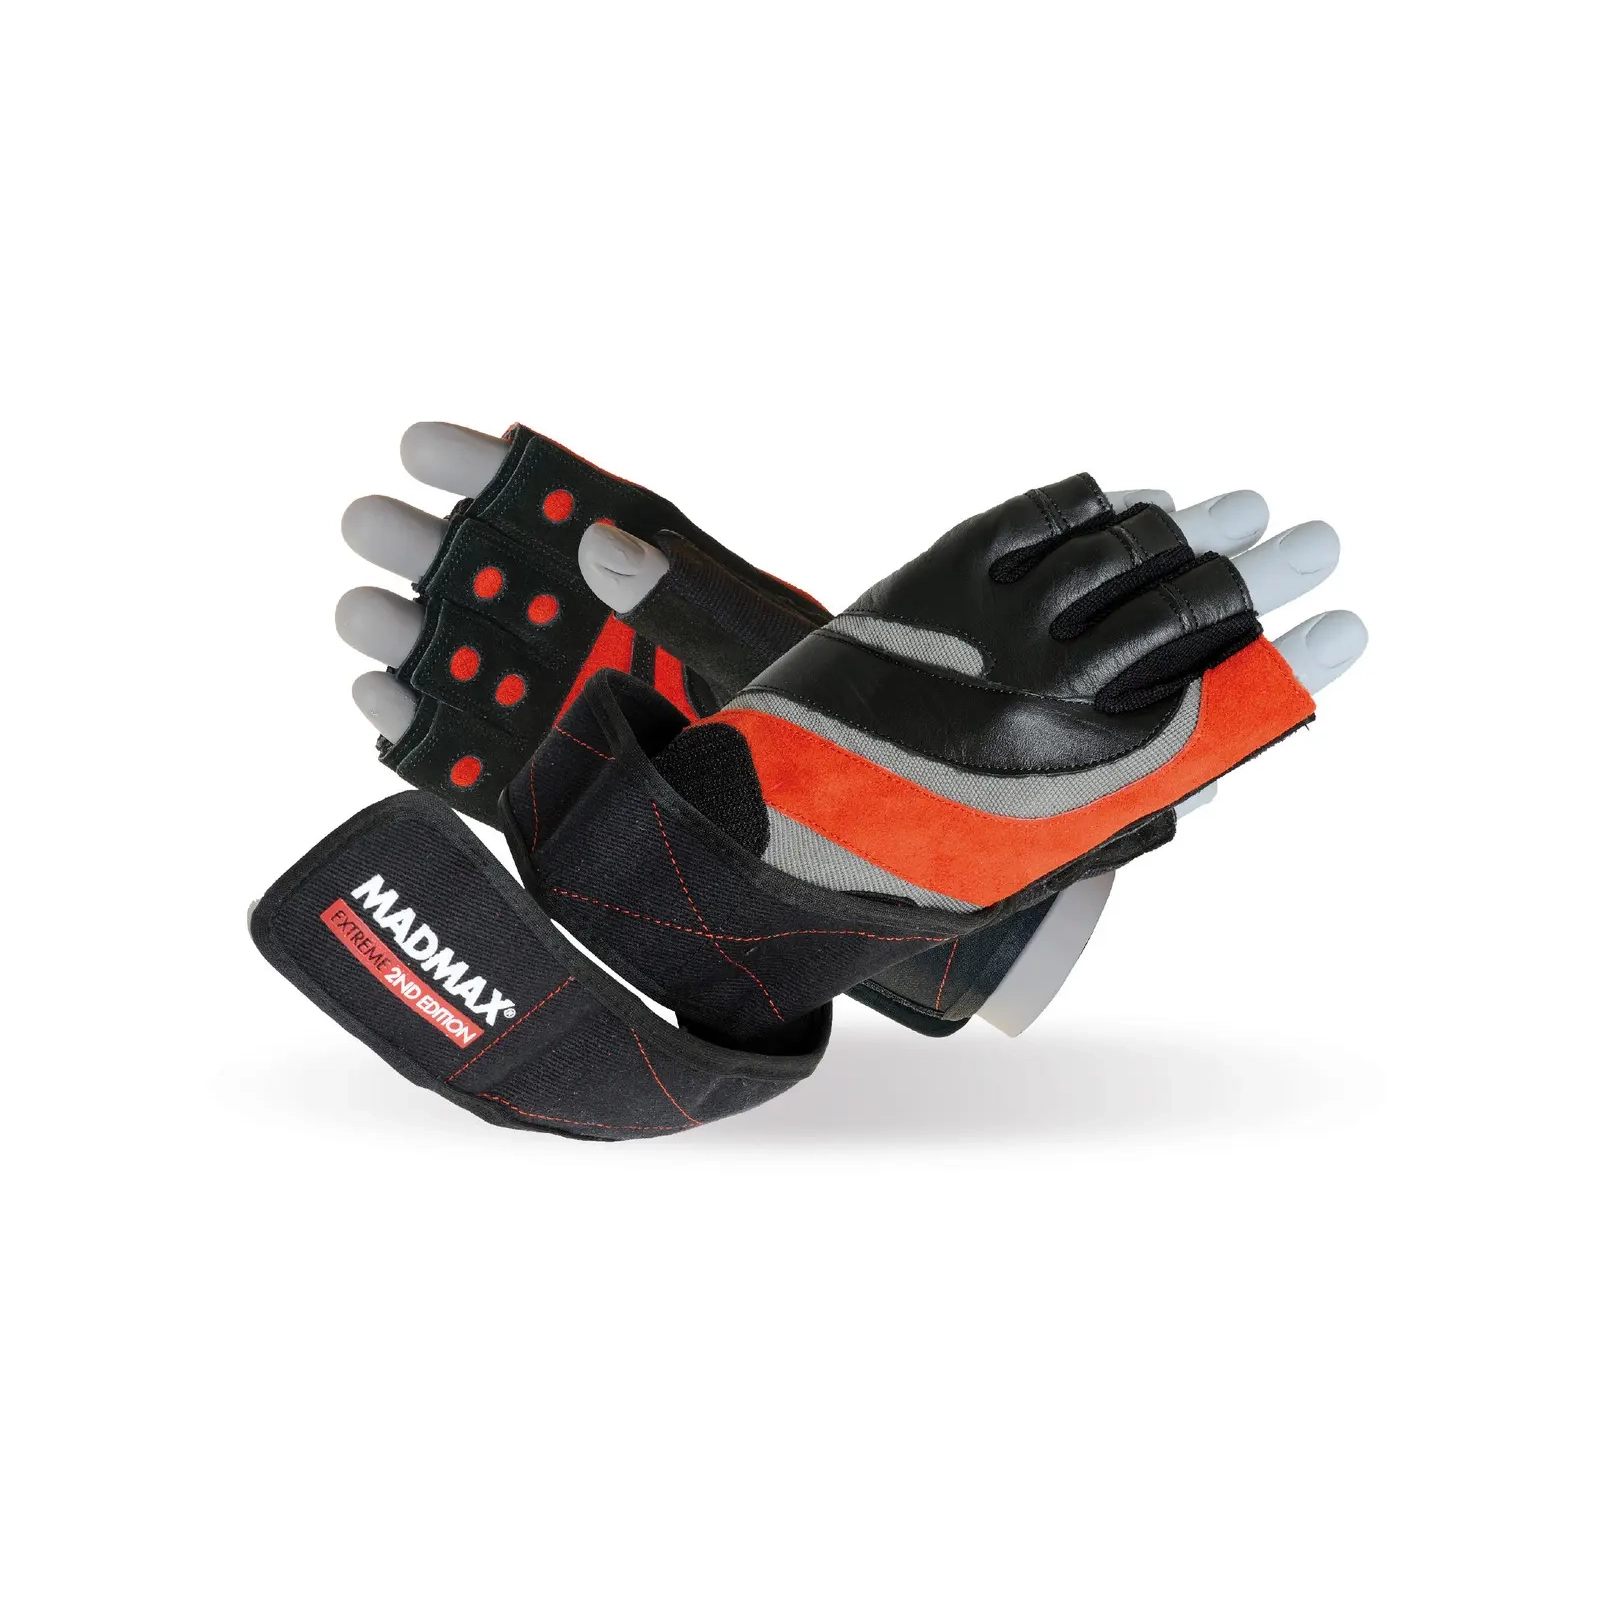 Перчатки для фитнеса MadMax MFG-568 Extreme 2nd edition Black/Red M (MFG-568_M)